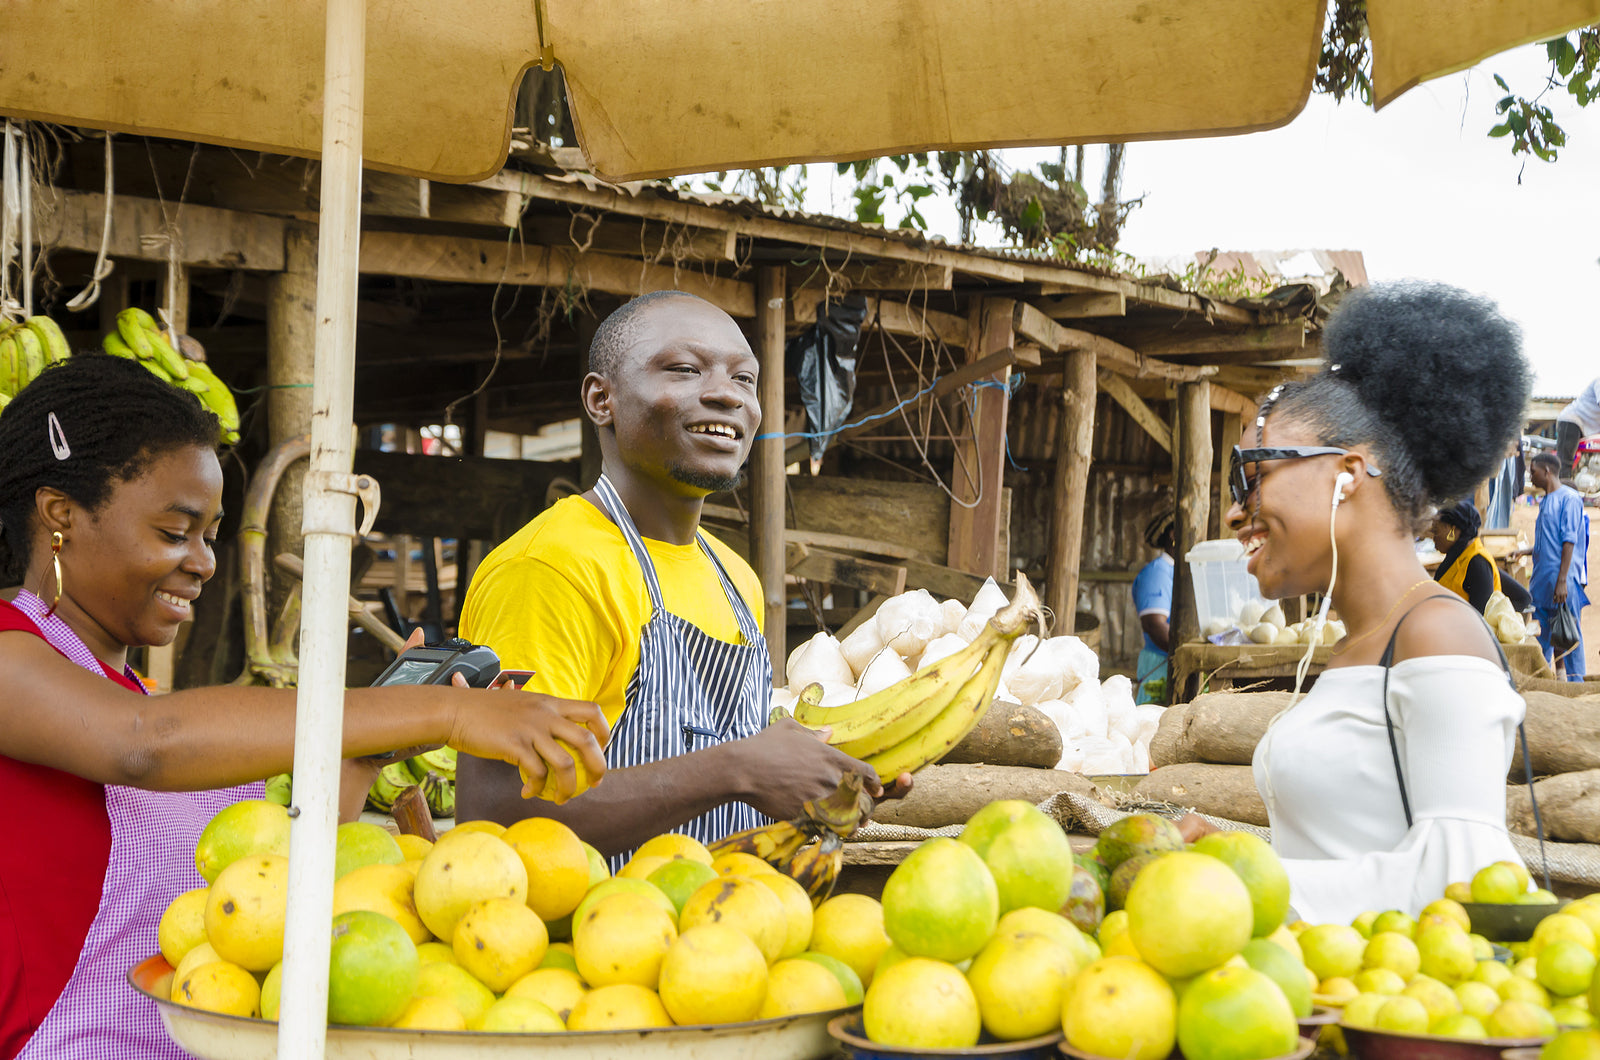 [Nigeria] Hope that new minimum wage will improve living standards